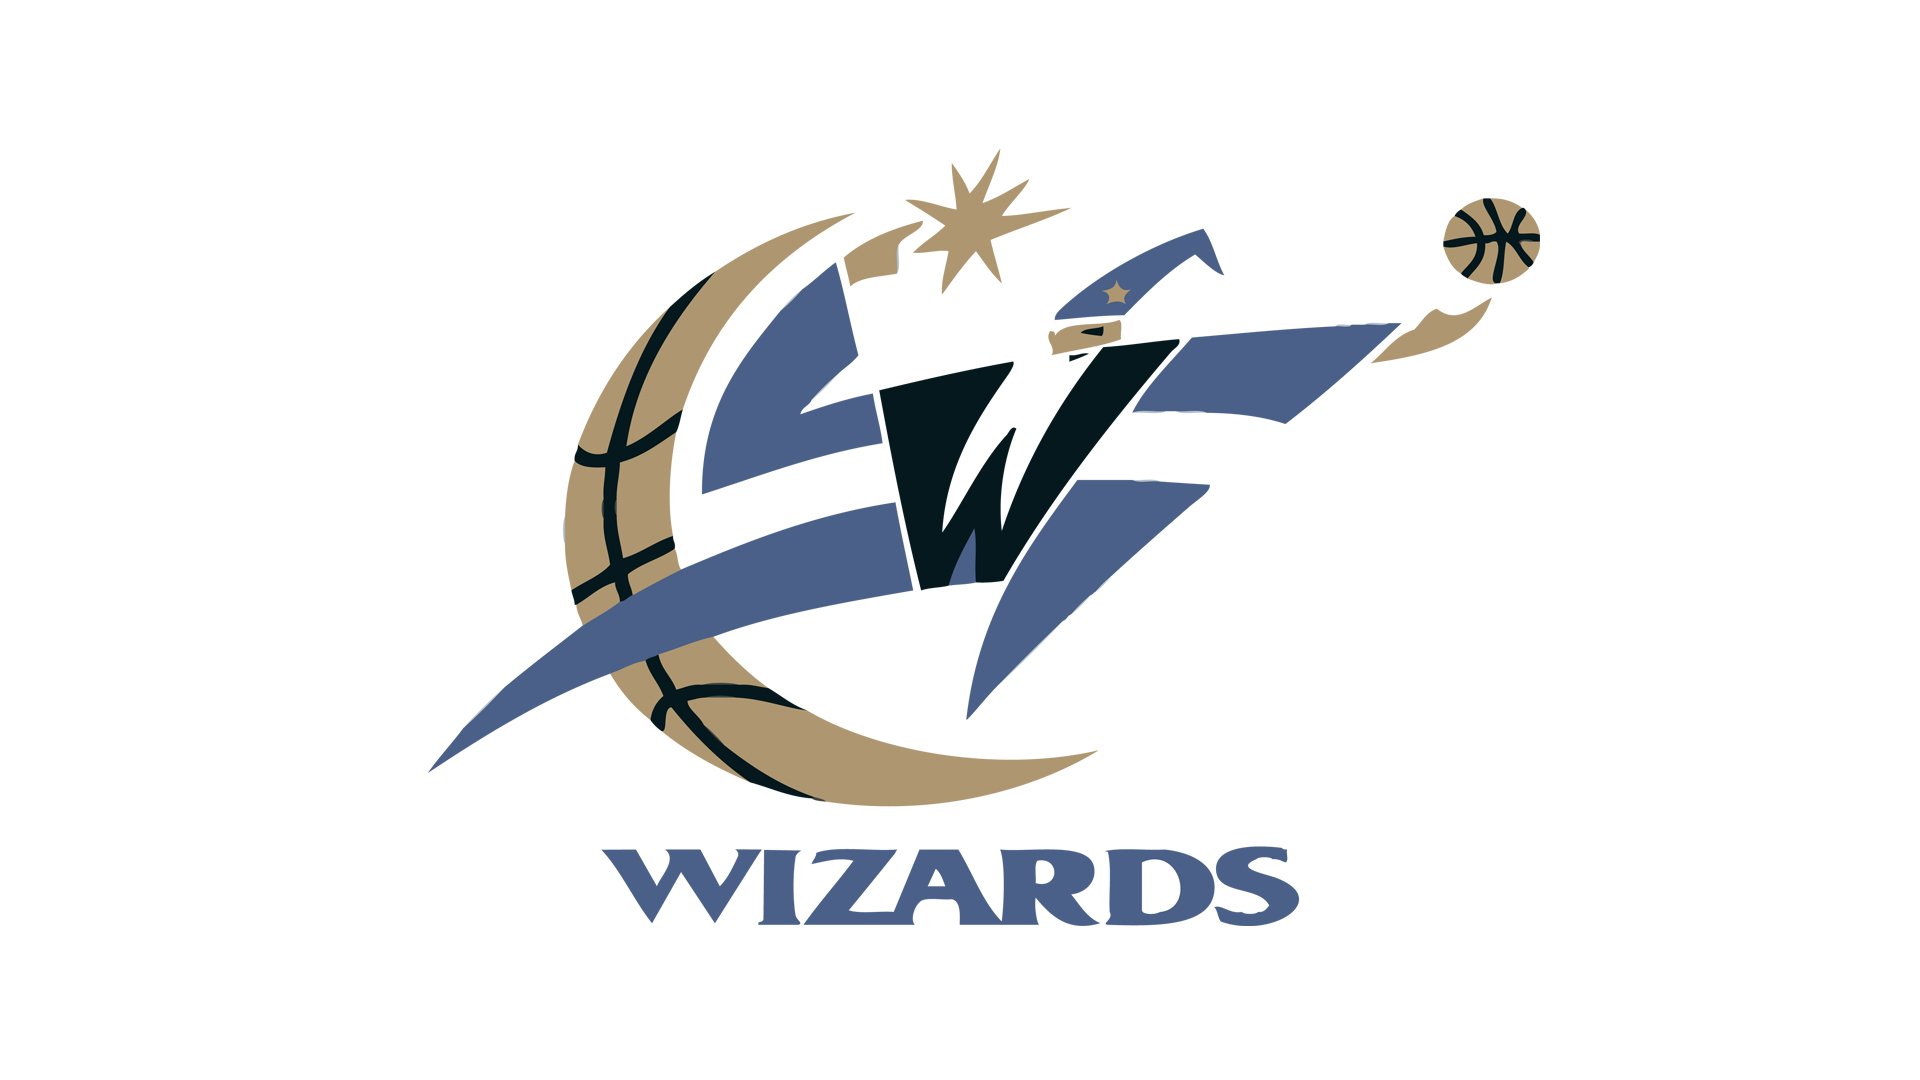 Washington Wizards Logo, Washington Wizards Symbol, Meaning, History and Evolution